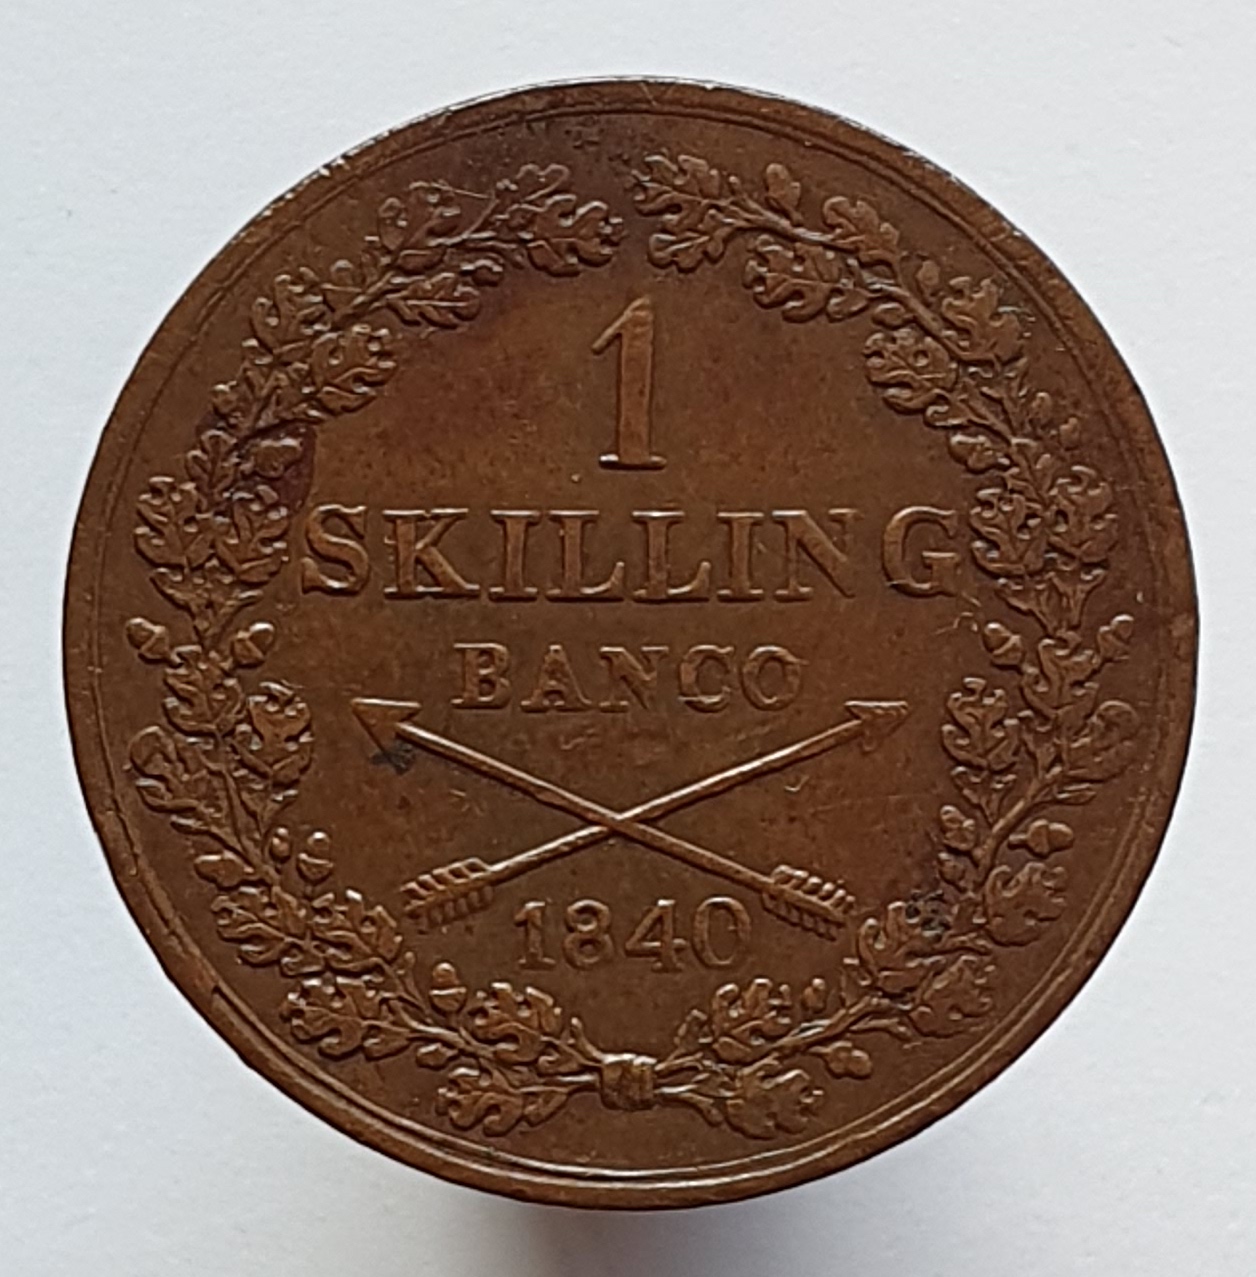 Karl XIV Johan 2 Skilling Banco 1840